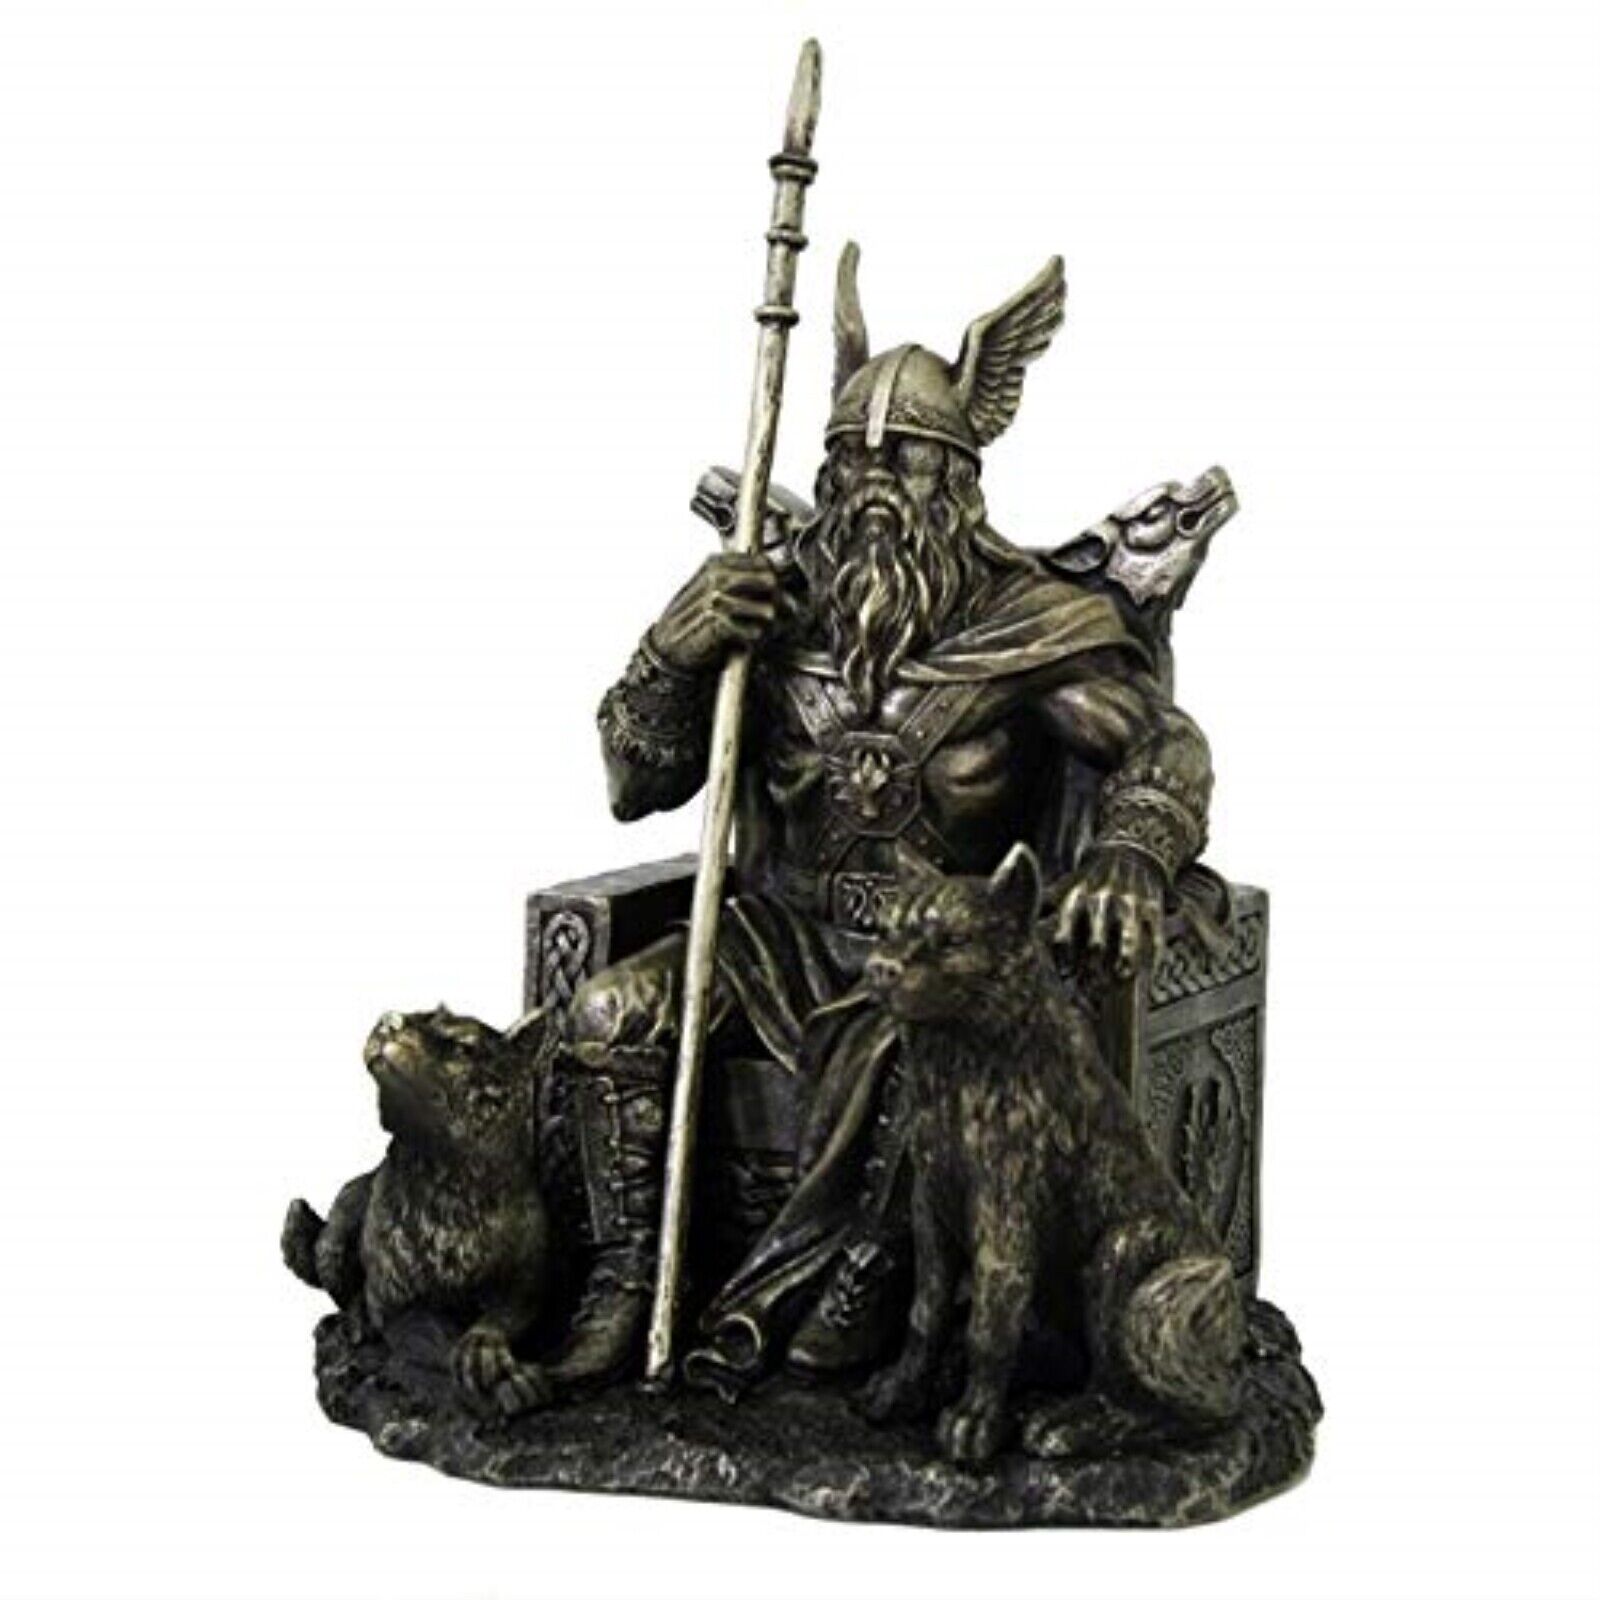 Odin Sitting on Throne Figurine New Norse Mythology King of Asgard